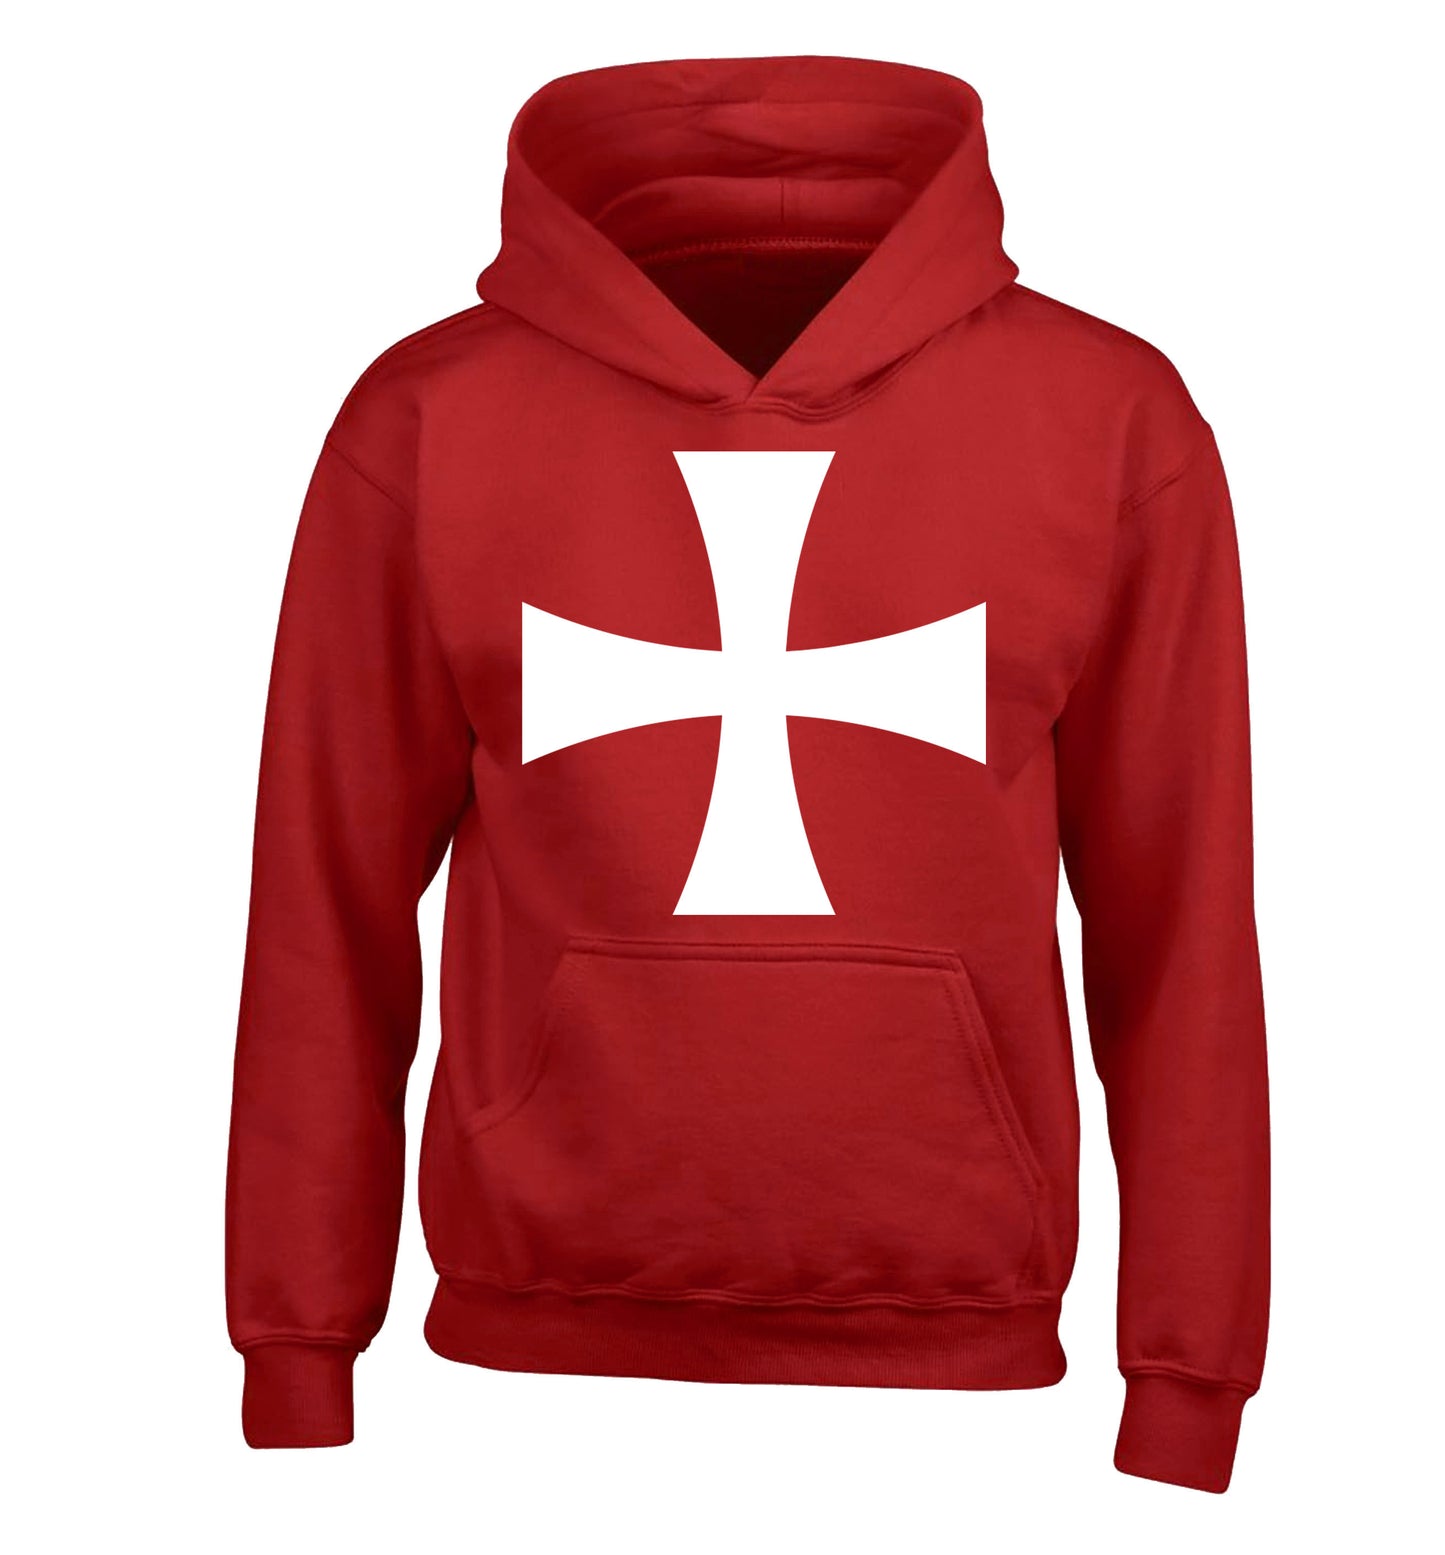 Knights Templar cross children's red hoodie 12-14 Years